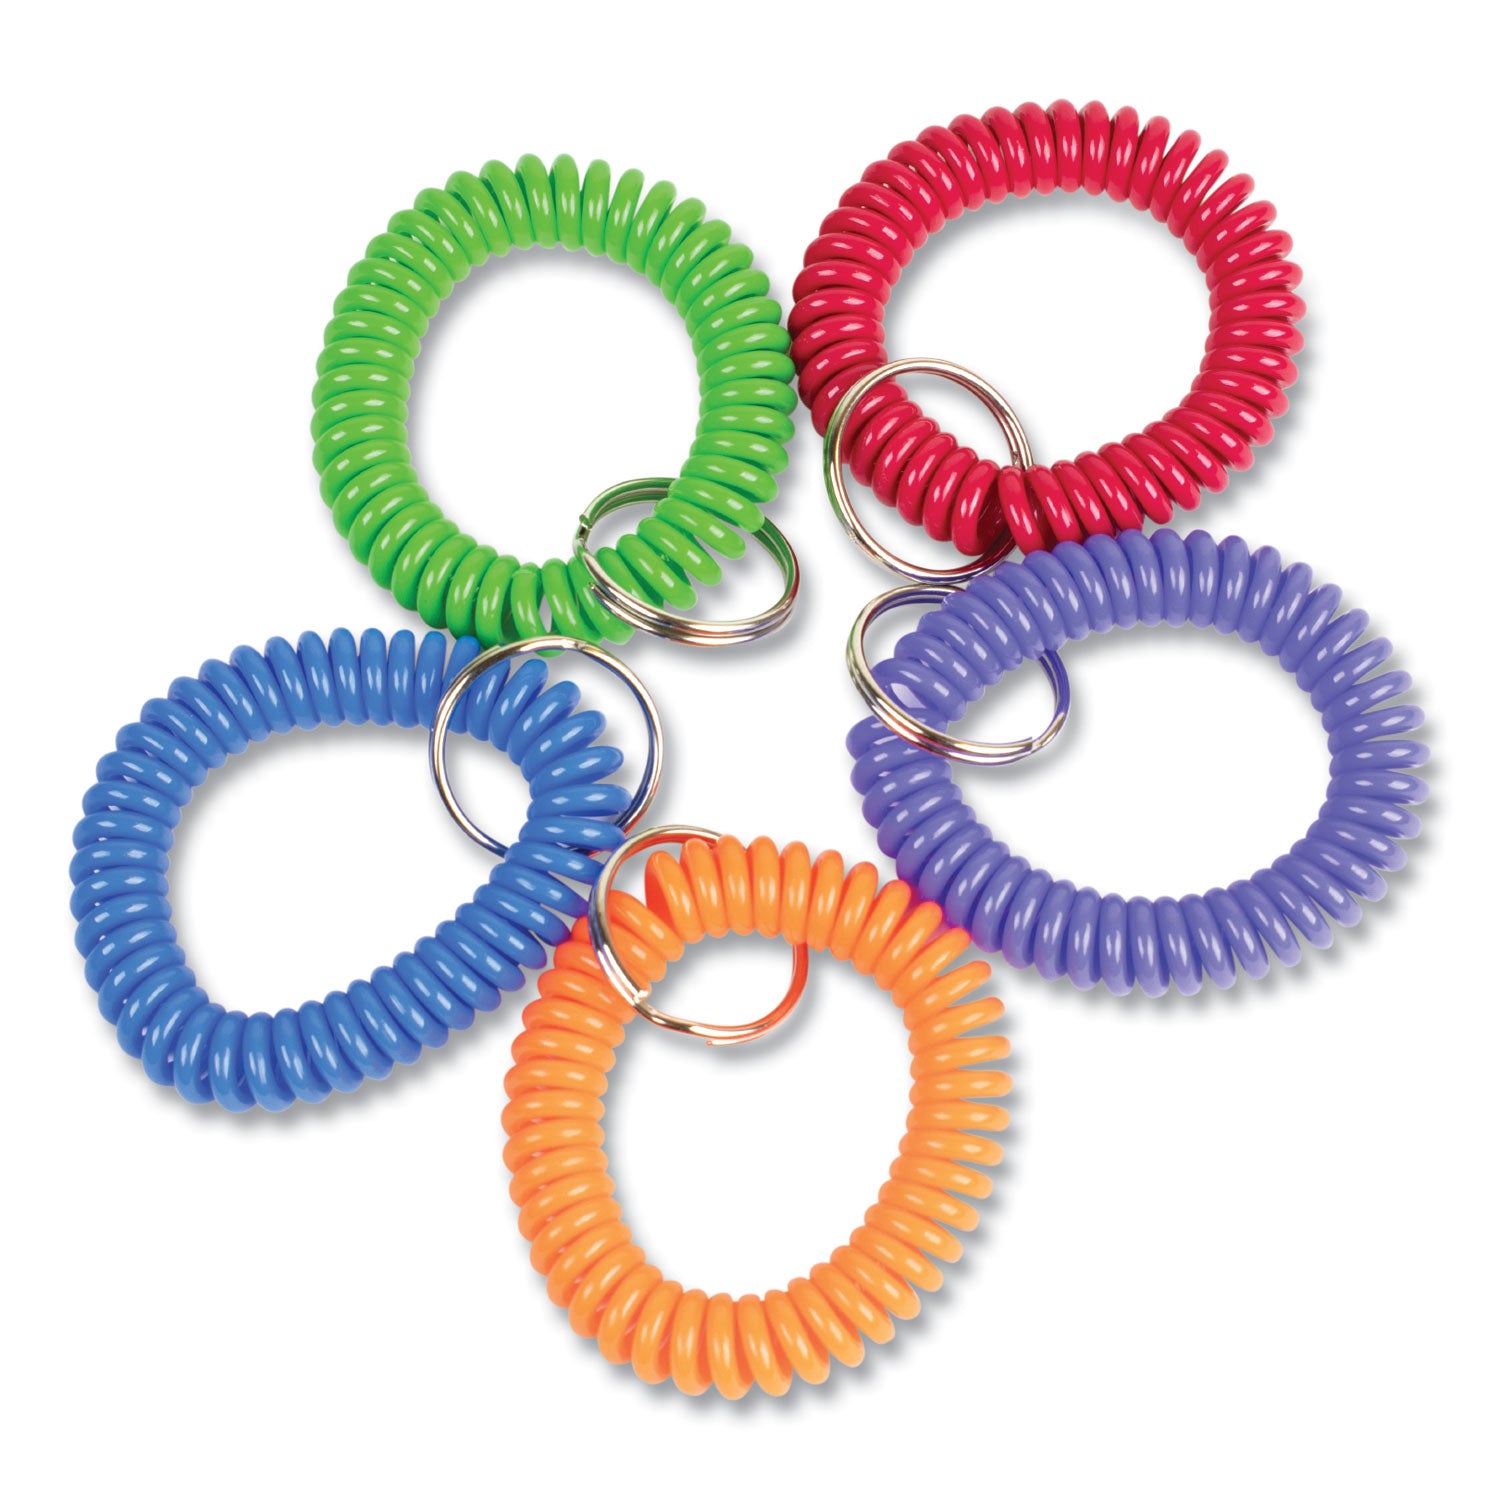 wrist-key-coil-key-organizers-blue-green-orange-purple-red-10-pack_cnk565104 - 1